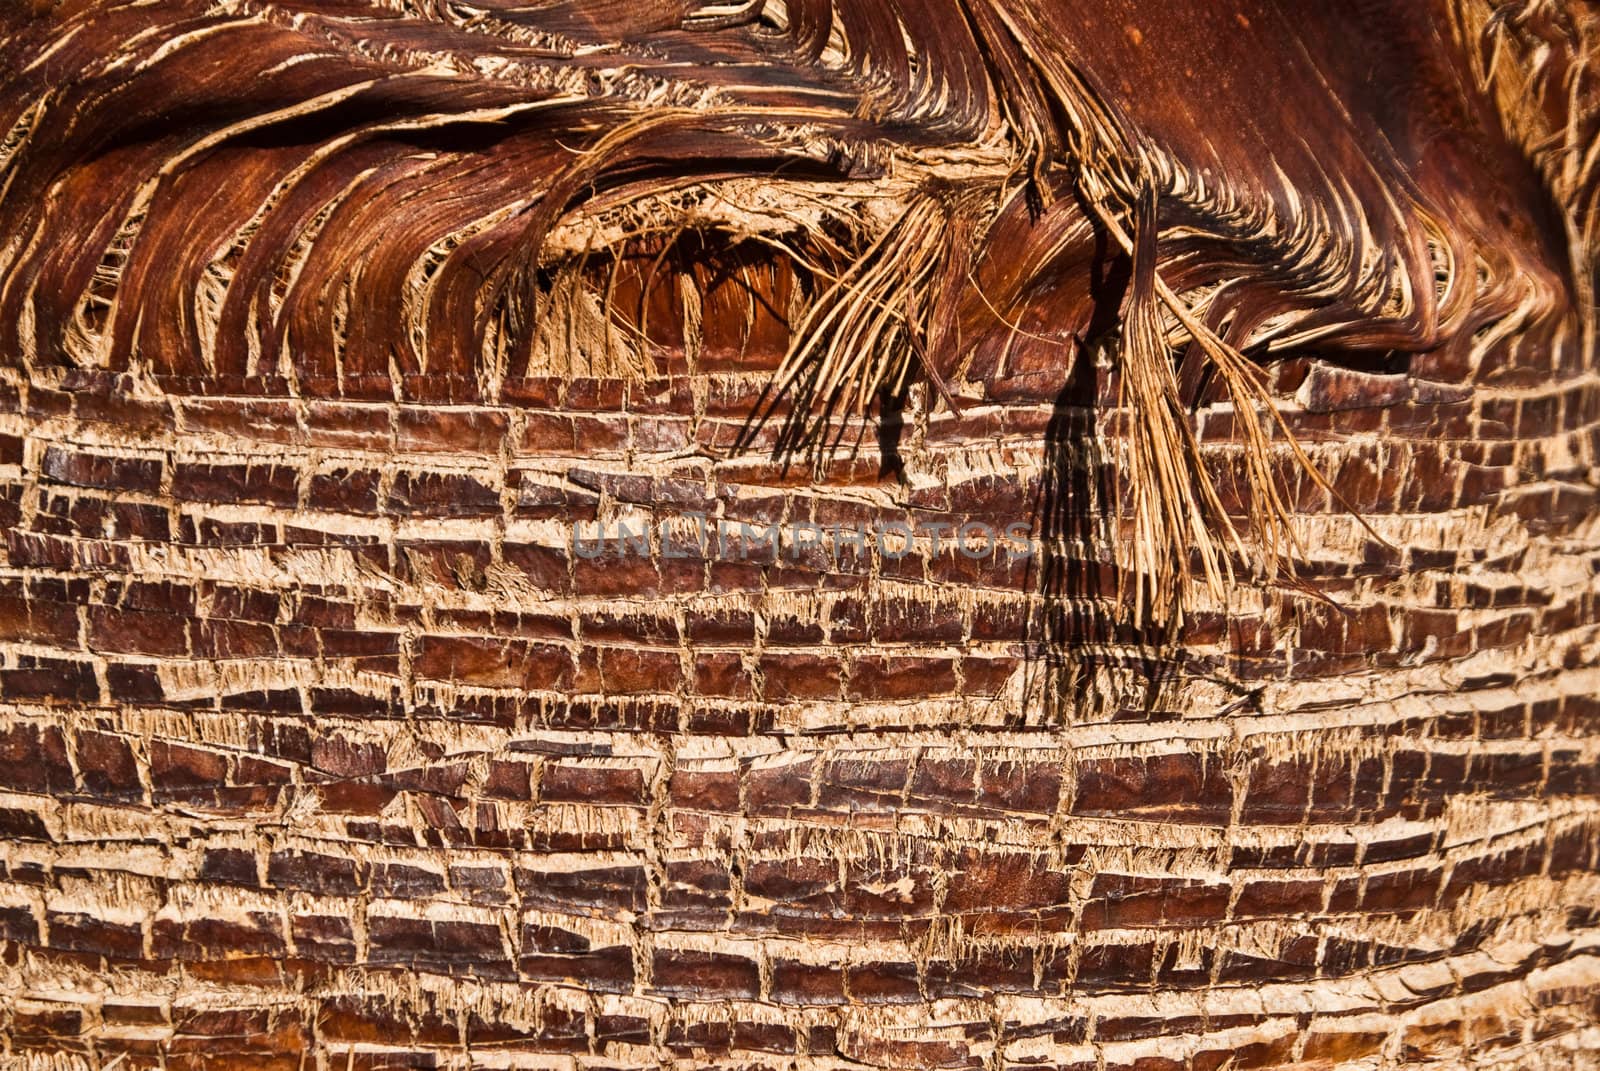 Palm Trunk Detail by emattil